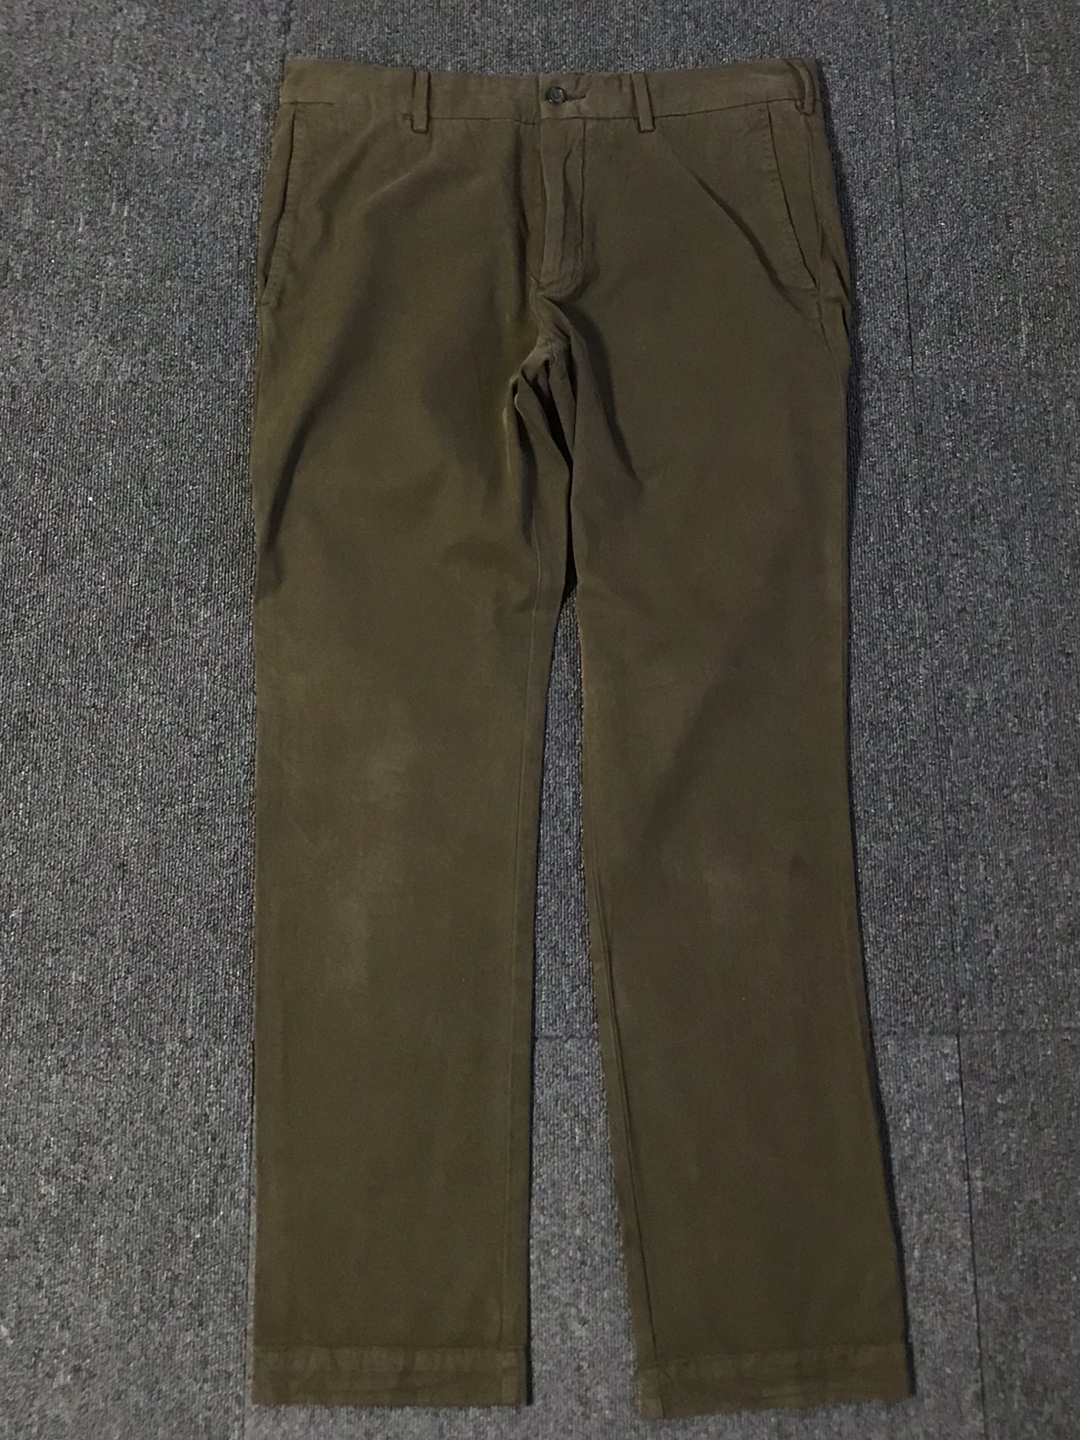 Polo RL lightweight cotton slim fit pants (33/32 size,